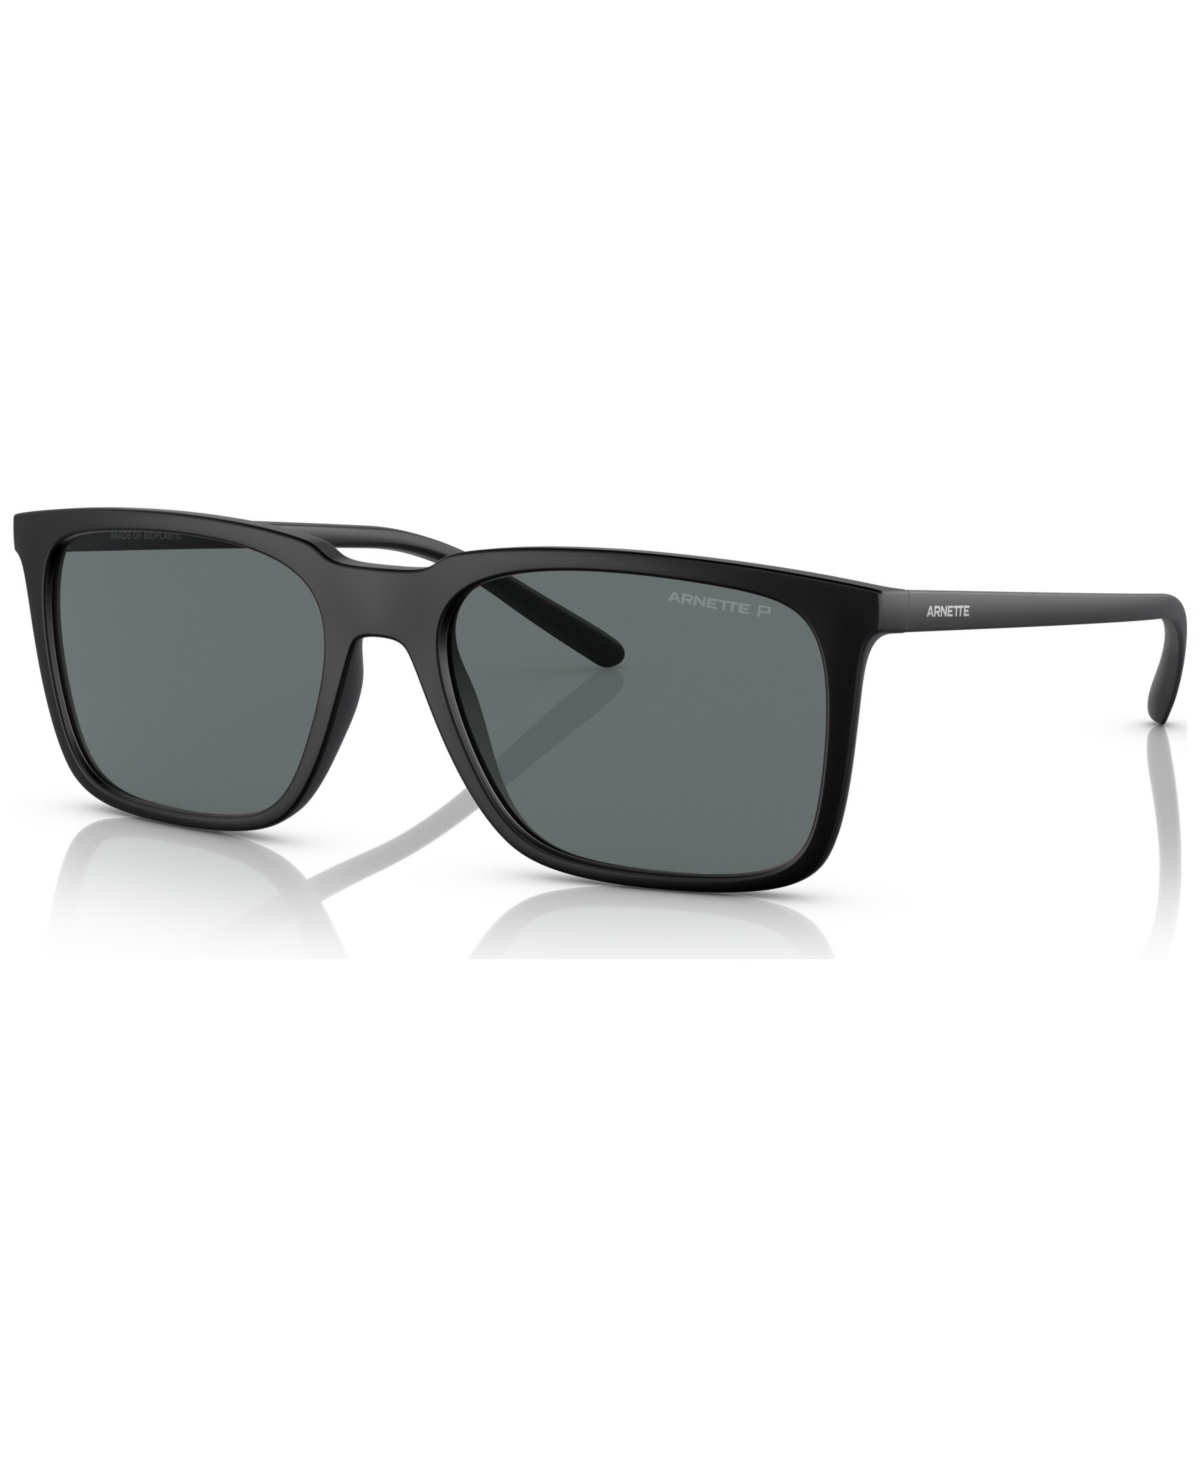 Unisex Polarized Sunglasses, AN431456-p - Matte Black